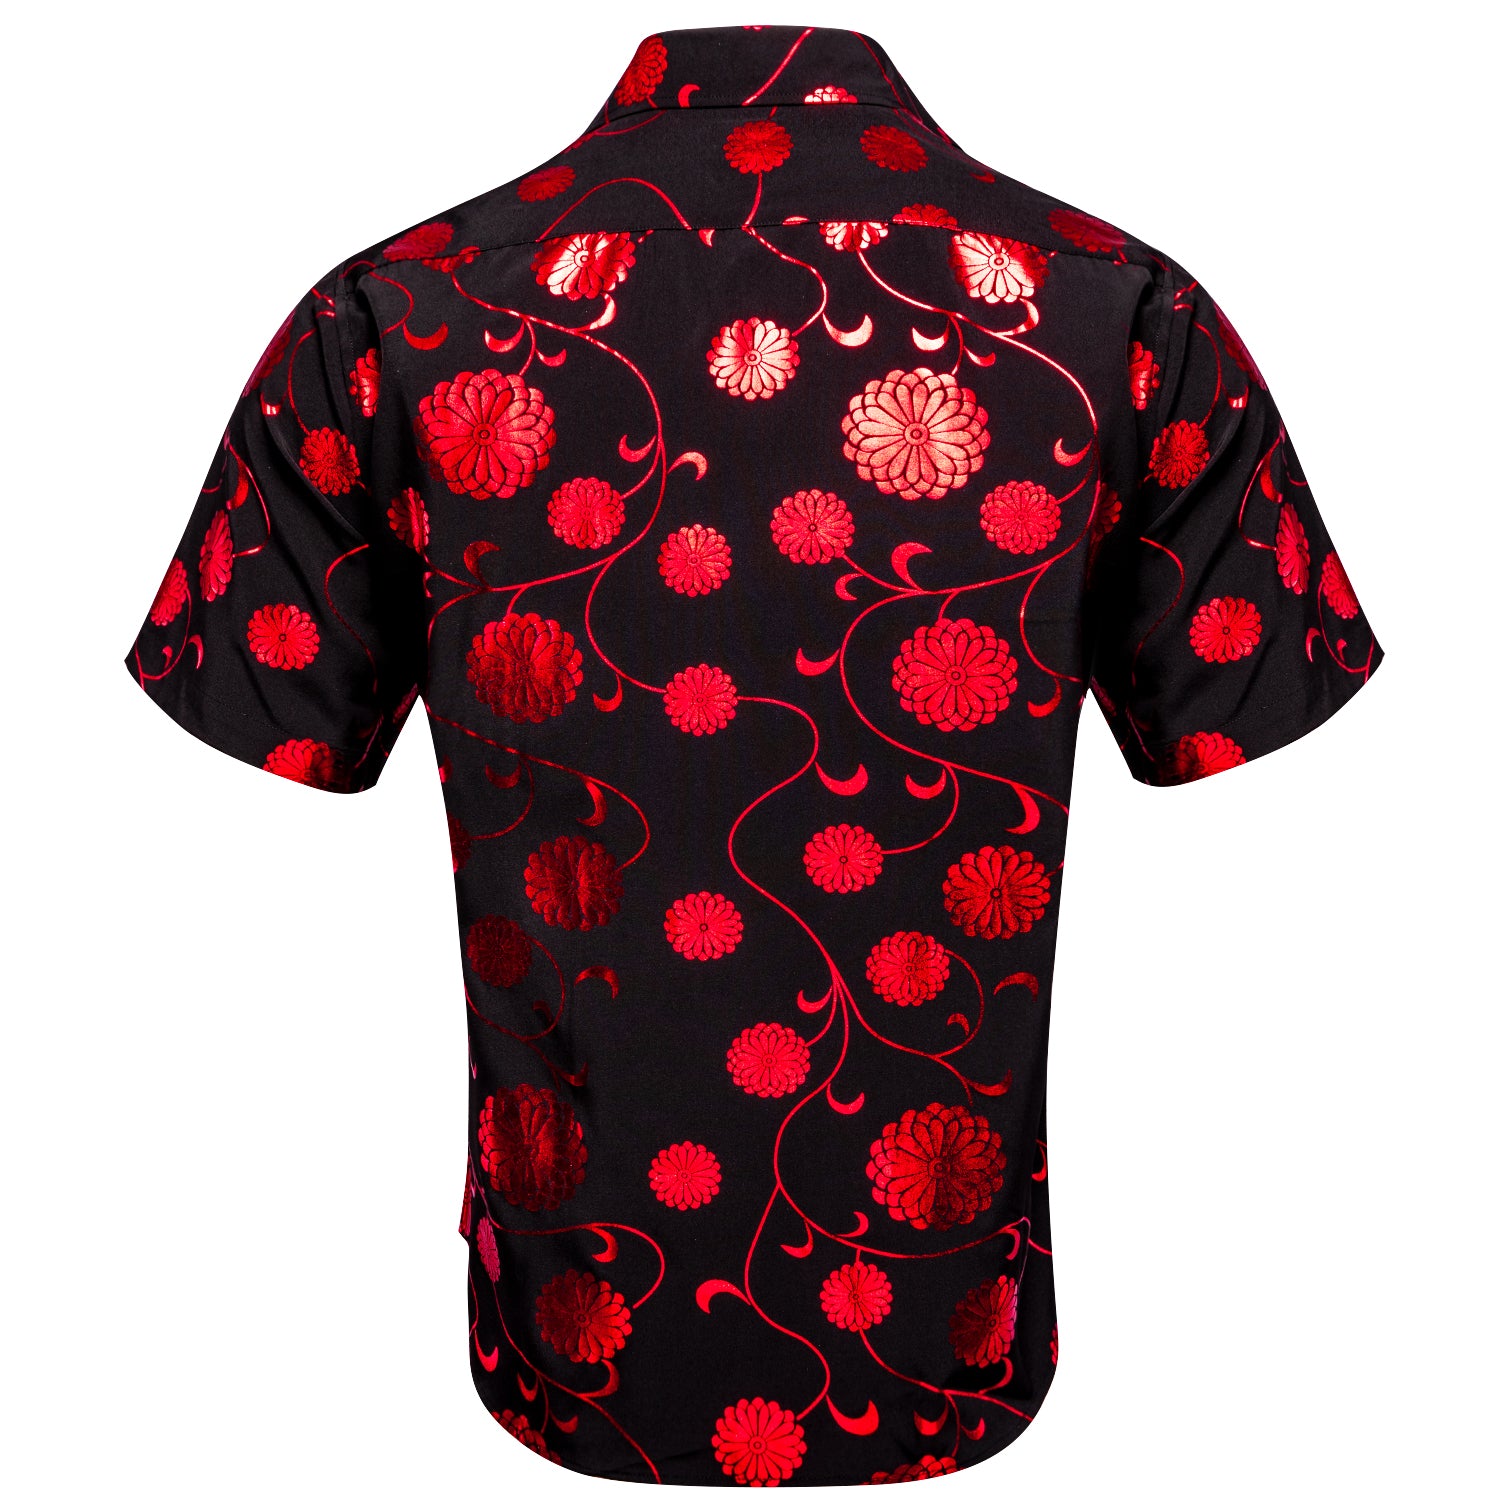 Clearance Sale New Black Red Flower Men's Short Sleeve Shirt